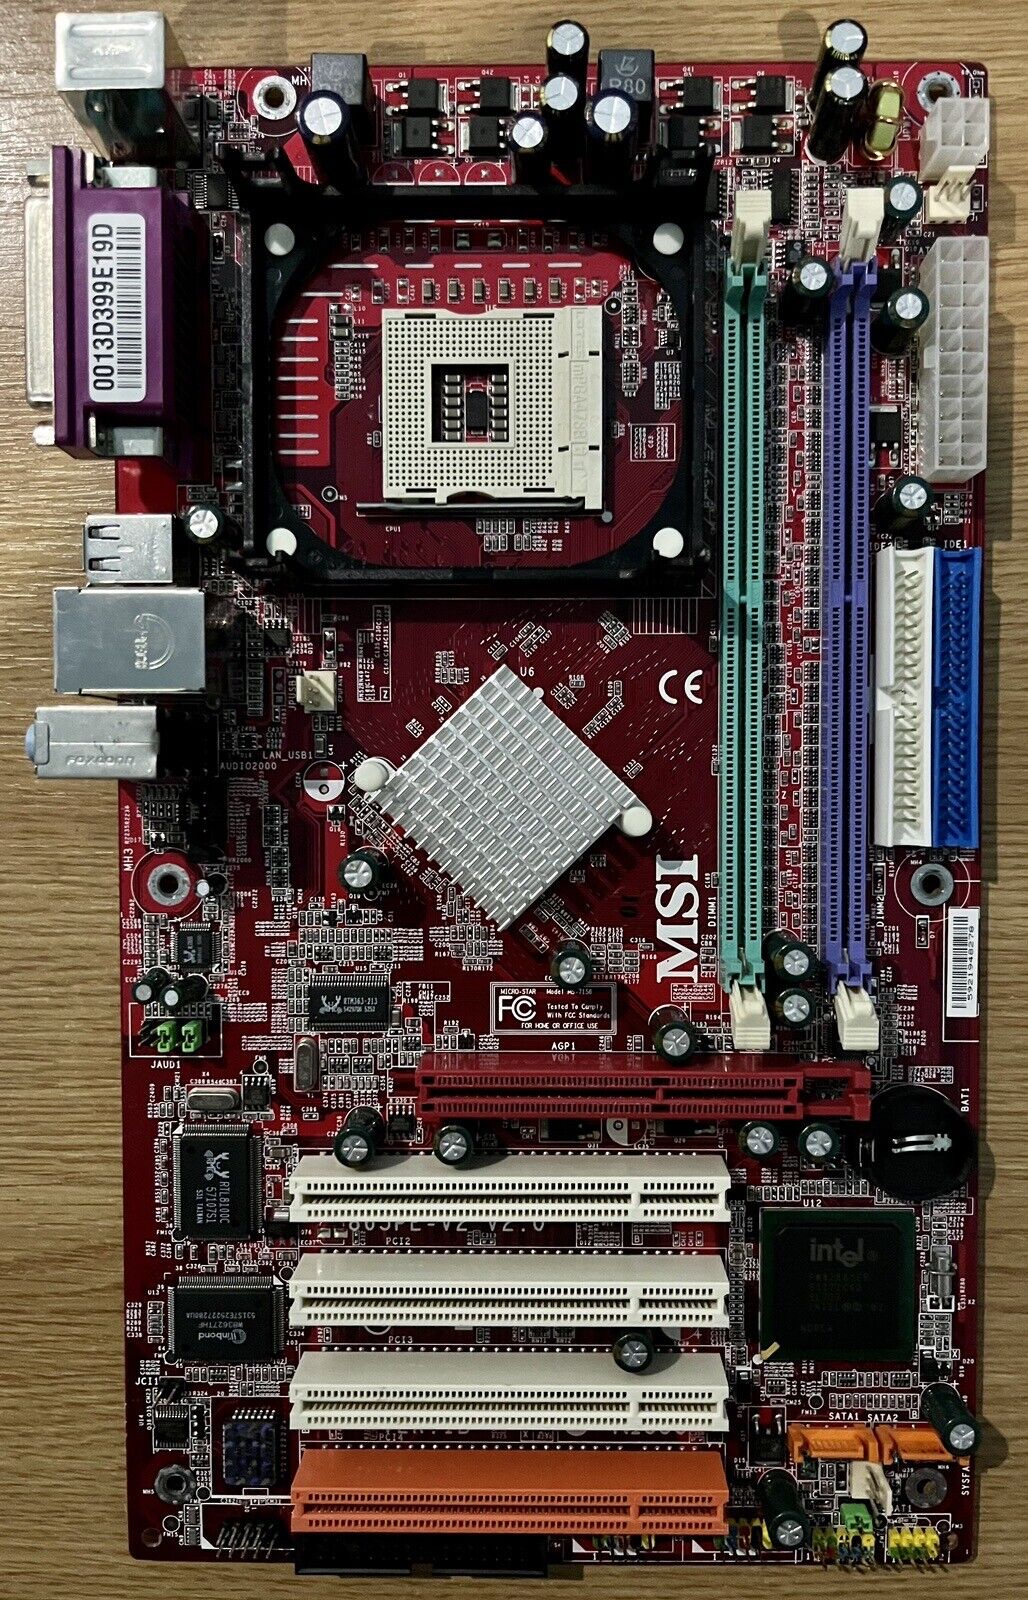 MSI 865PE-V2 SOCKET 478 Mainboard